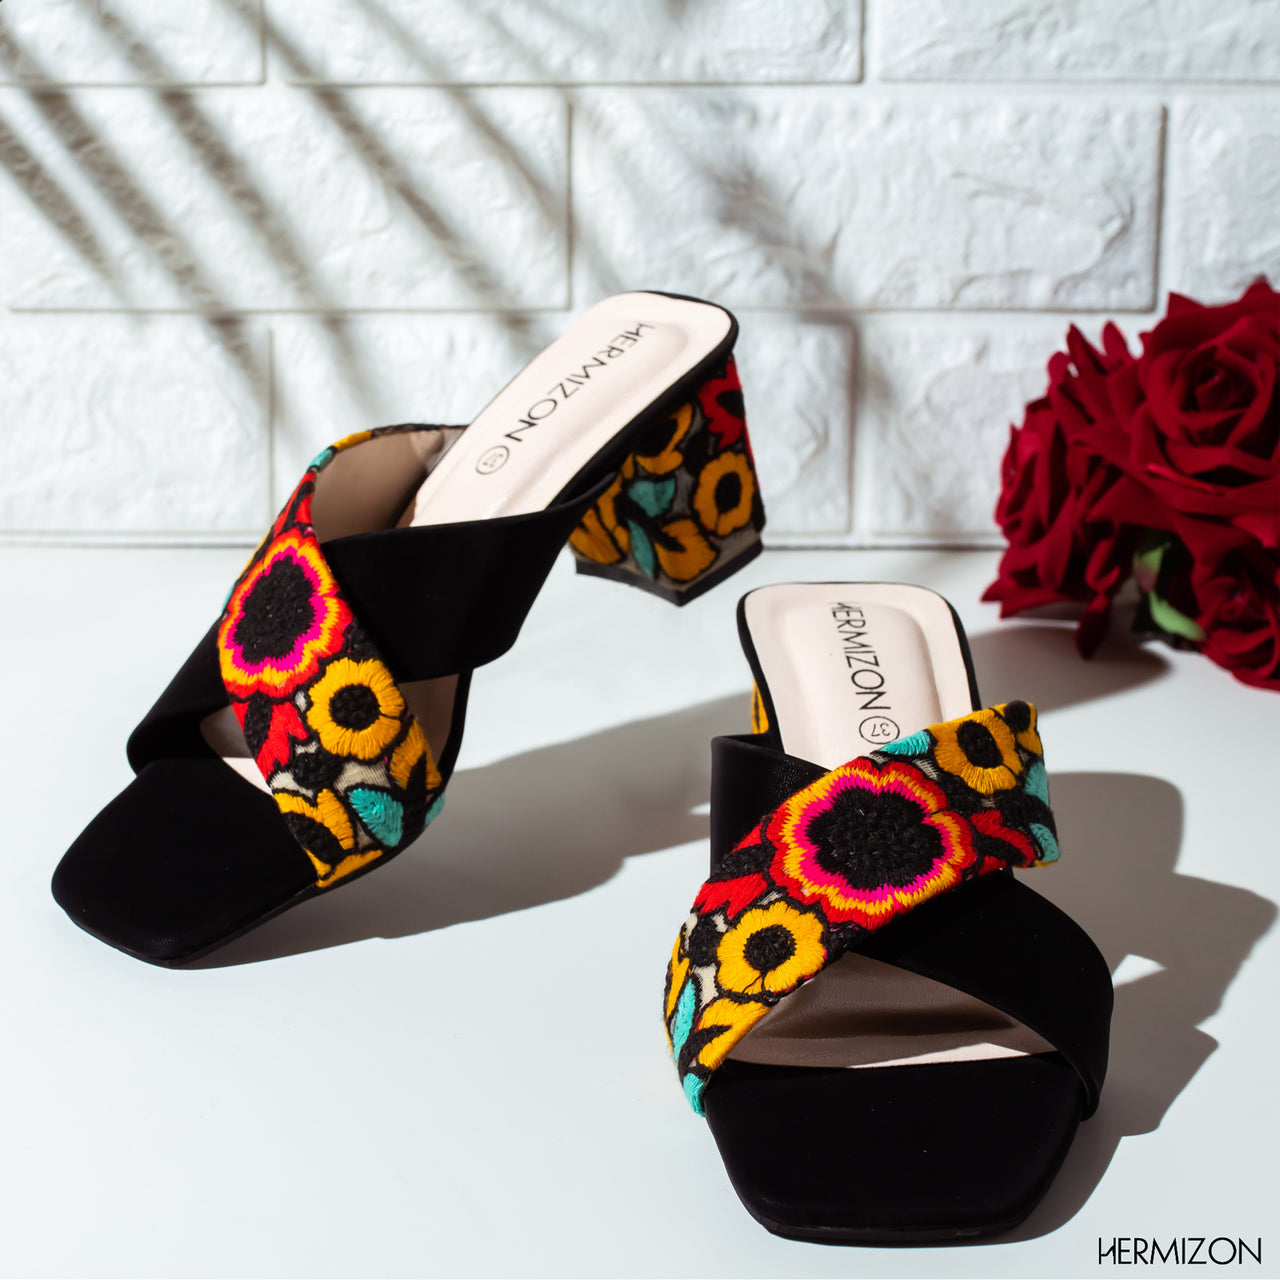 A black color semi heel shoe with colorful design